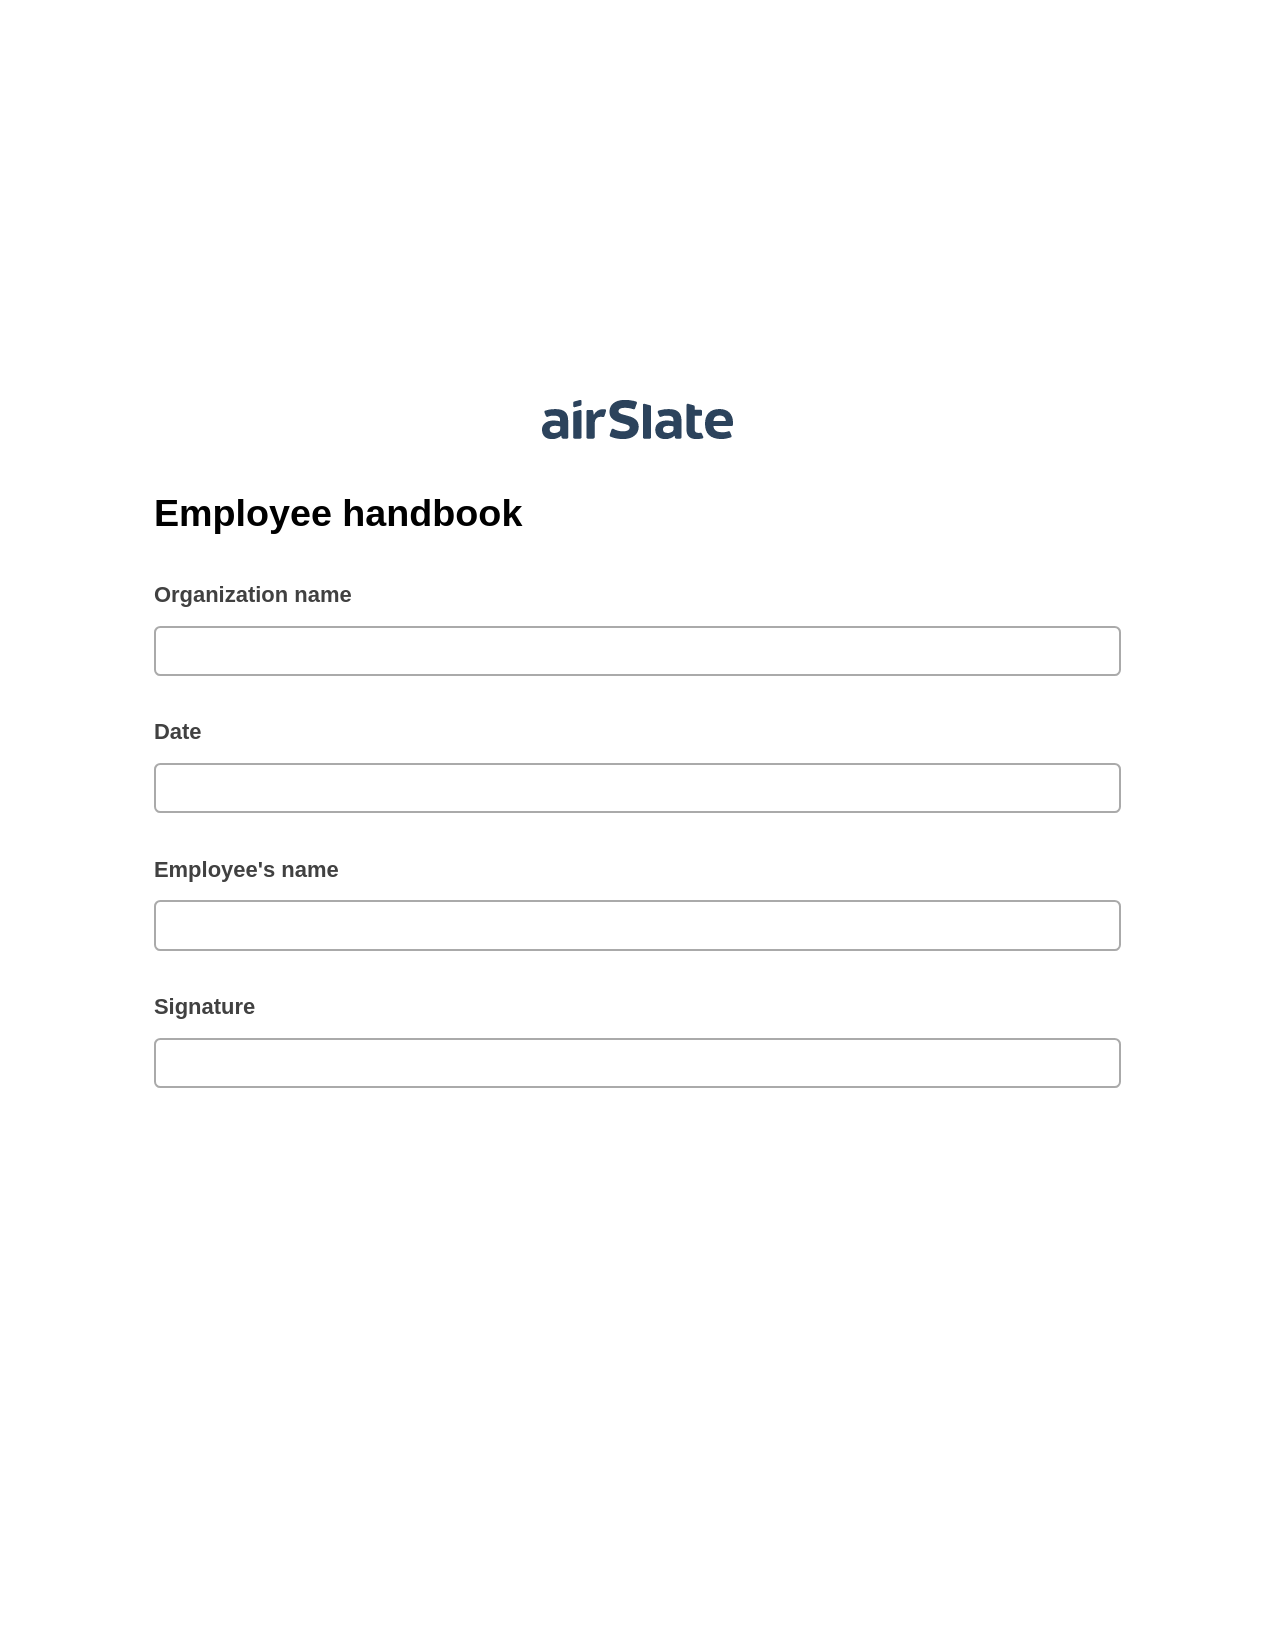 Employee handbook Pre-fill from Google Sheets Bot, Hide Signatures Bot, Export to Salesforce Bot